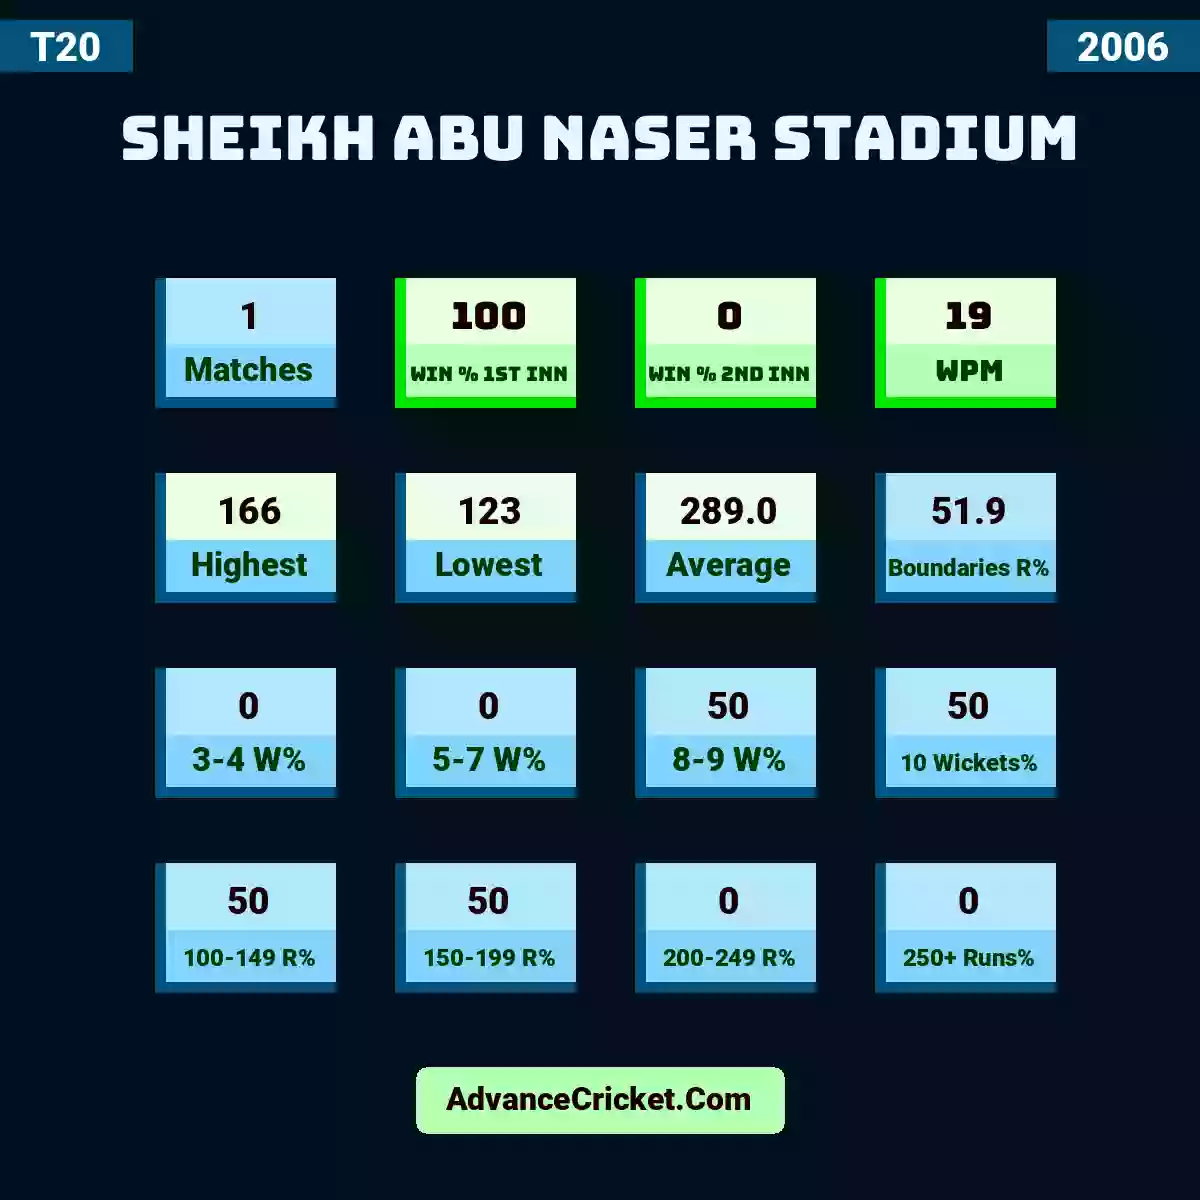 Image showing Sheikh Abu Naser Stadium with Matches: 1, Win % 1st Inn: 100, Win % 2nd Inn: 0, WPM: 19, Highest: 166, Lowest: 123, Average: 289.0, Boundaries R%: 51.9, 3-4 W%: 0, 5-7 W%: 0, 8-9 W%: 50, 10 Wickets%: 50, 100-149 R%: 50, 150-199 R%: 50, 200-249 R%: 0, 250+ Runs%: 0.